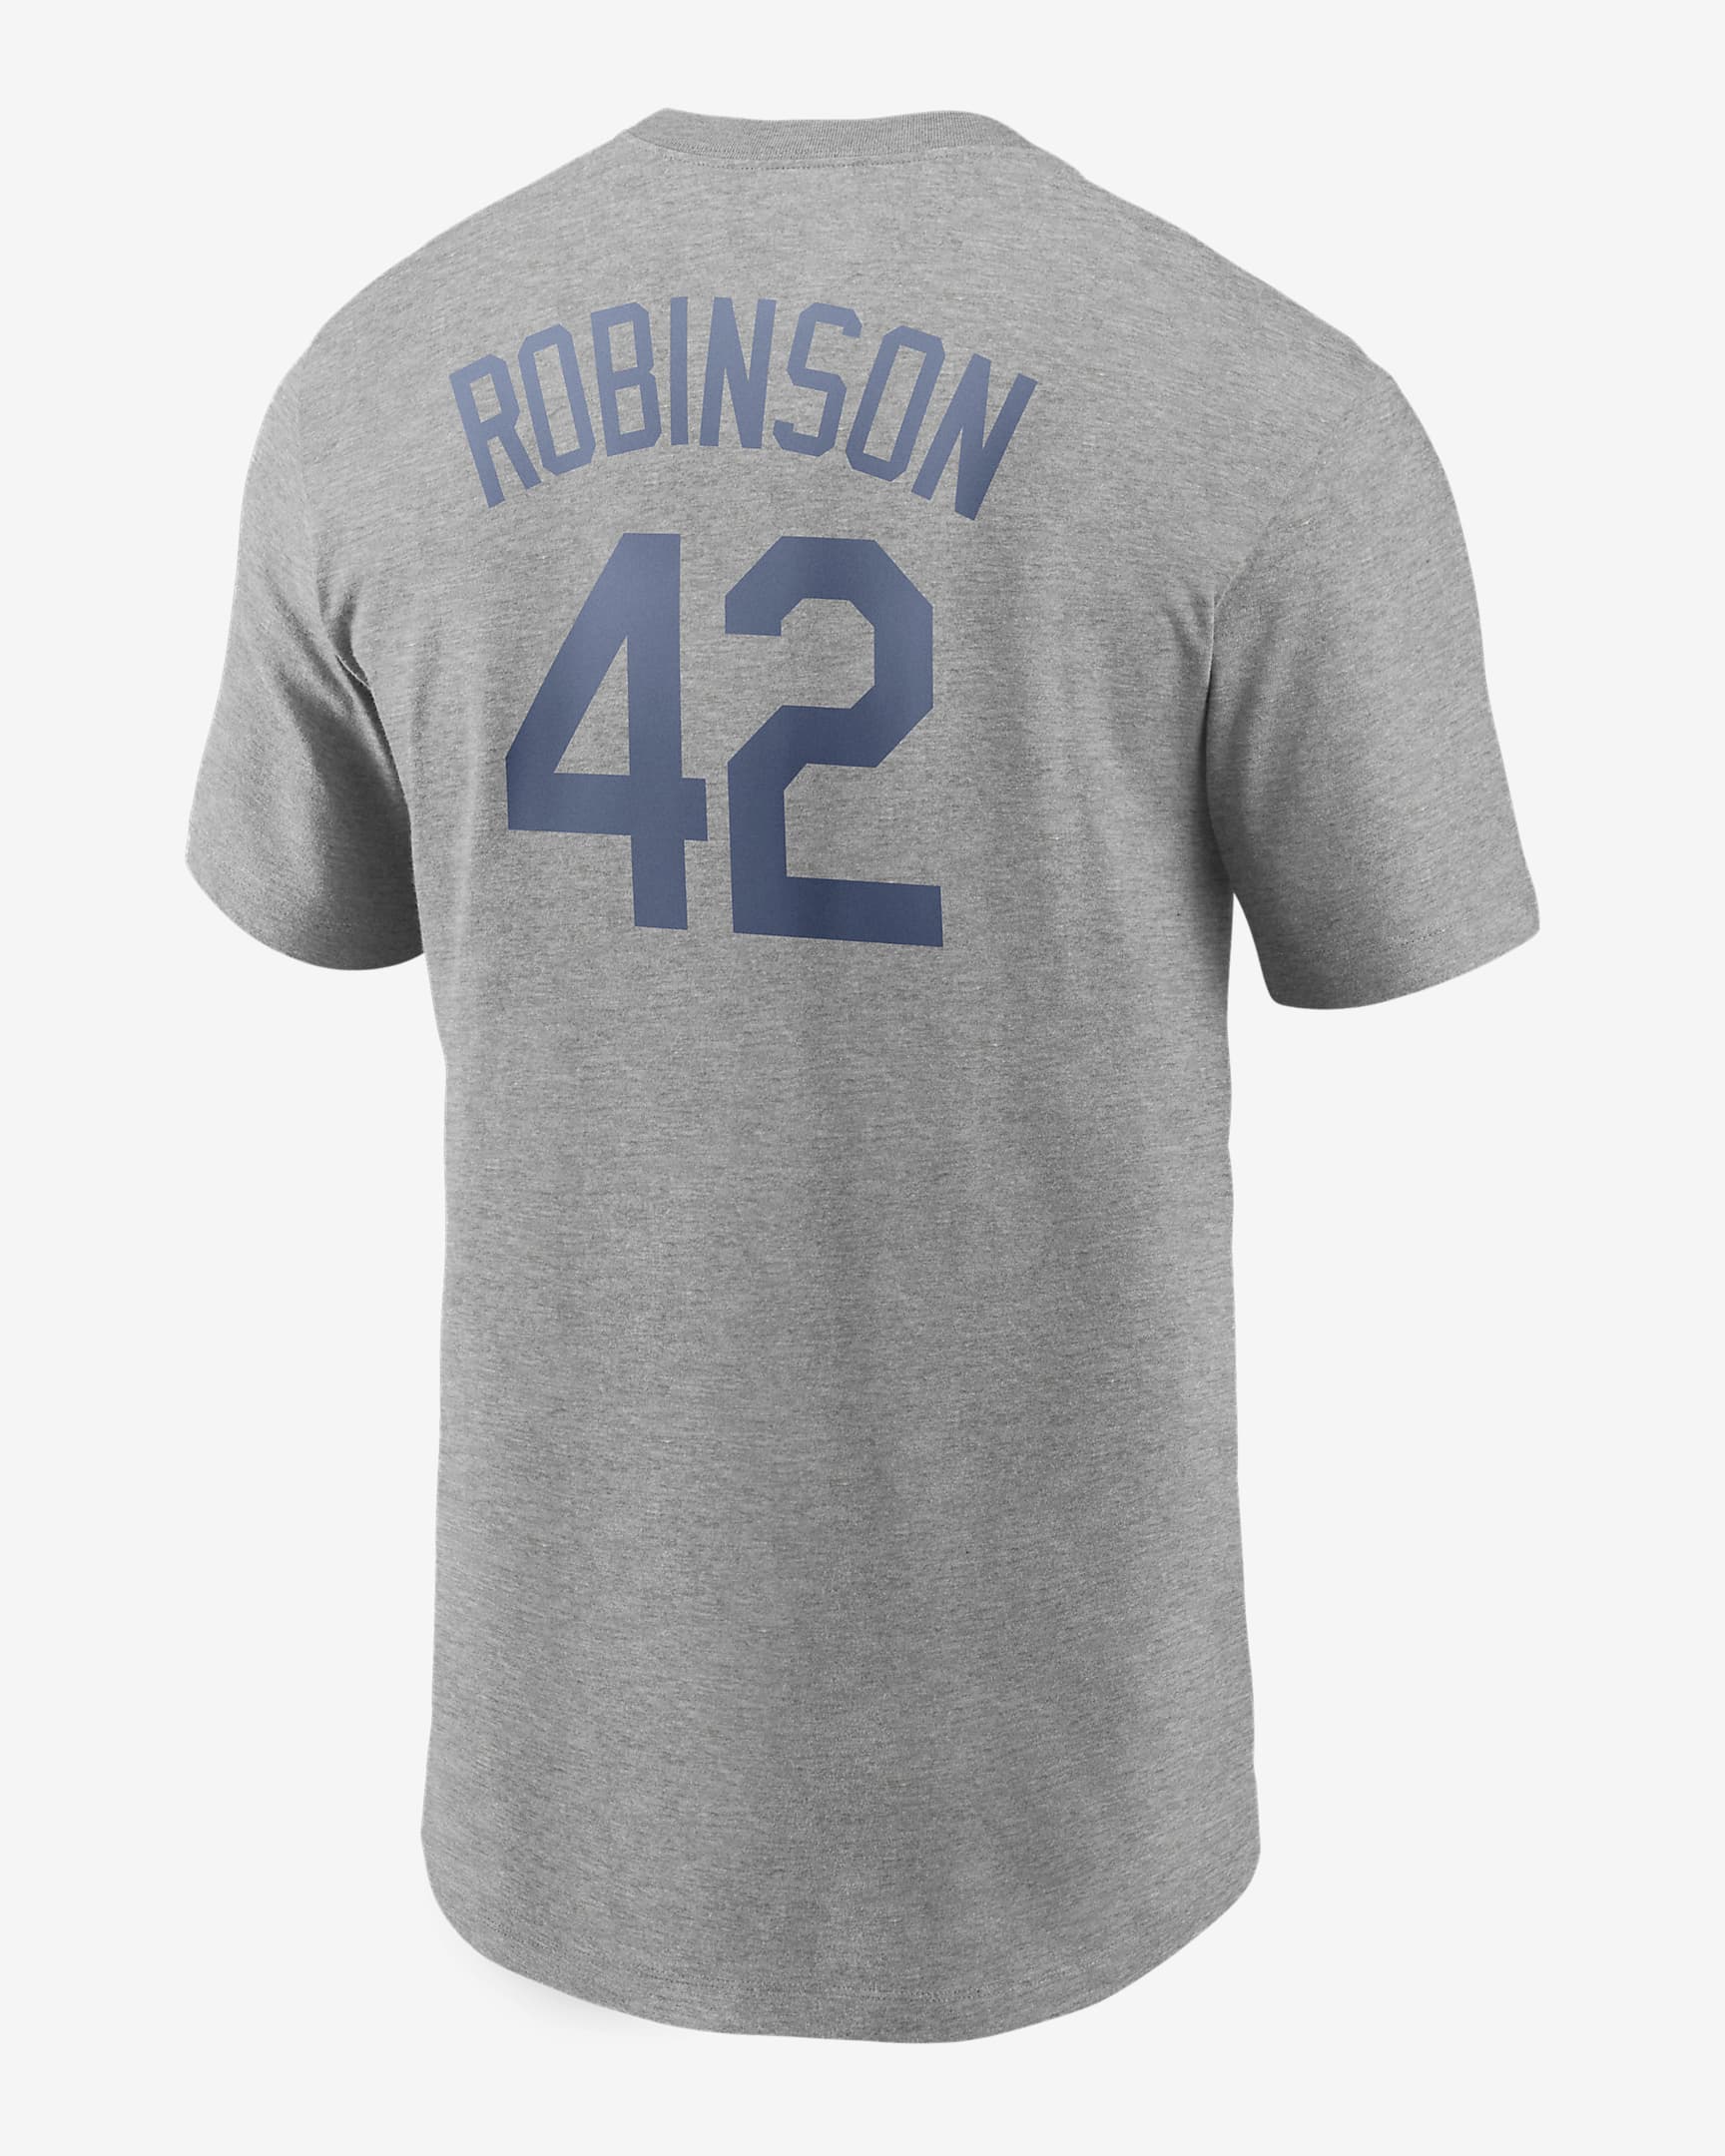 MLB Brooklyn Dodgers (Jackie Robinson) Men's T-Shirt. Nike.com